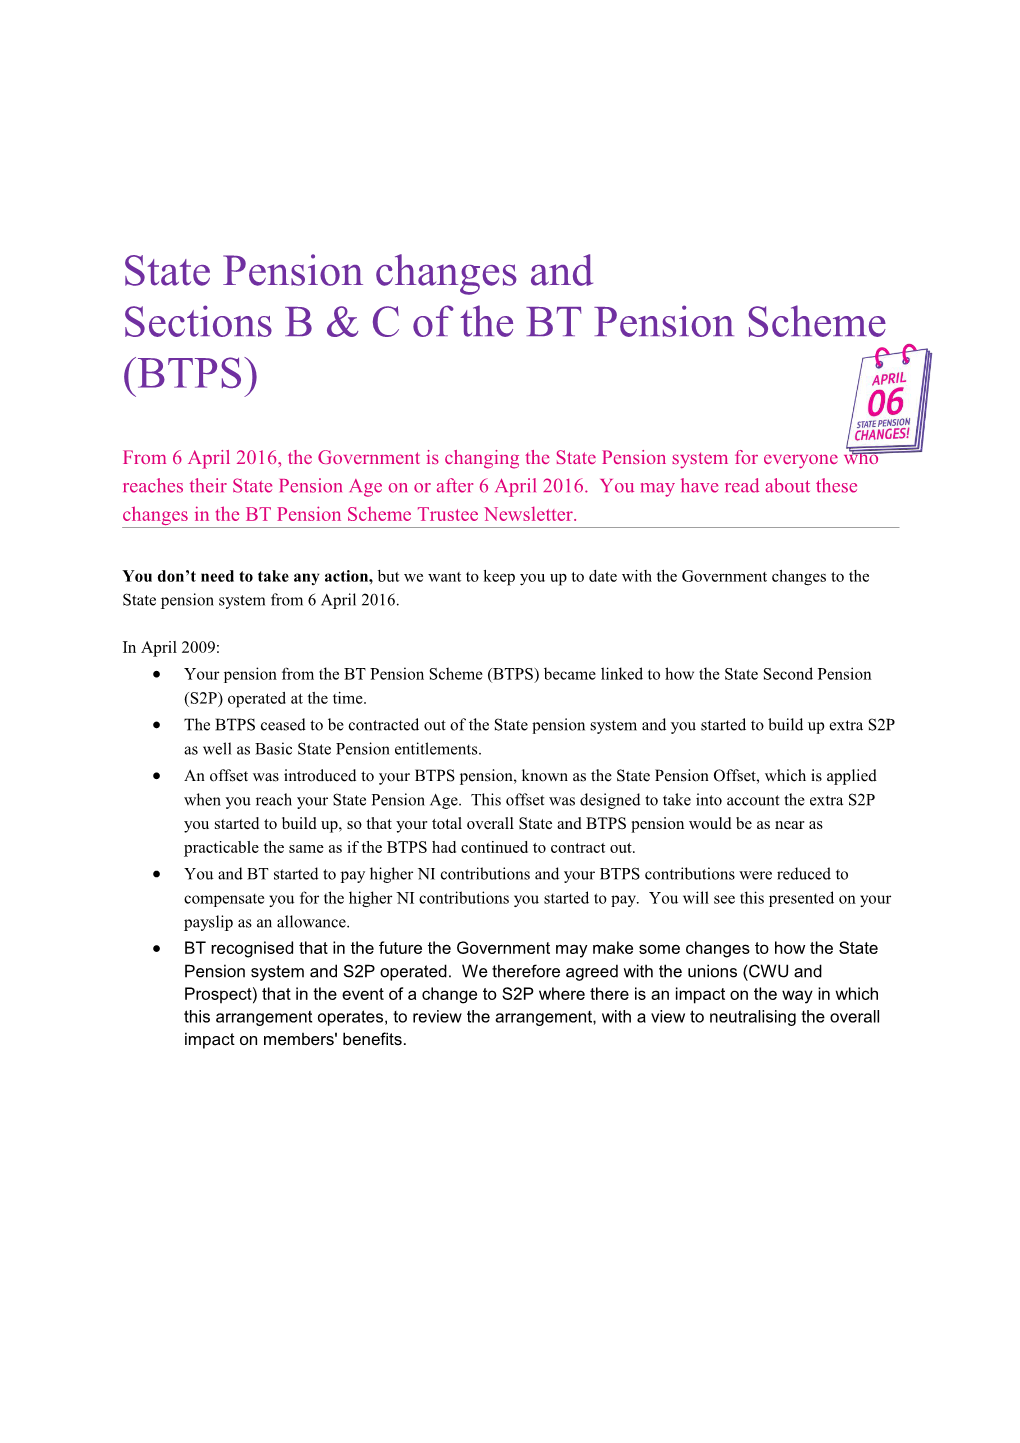 Sections B & C of the BT Pension Scheme (BTPS)